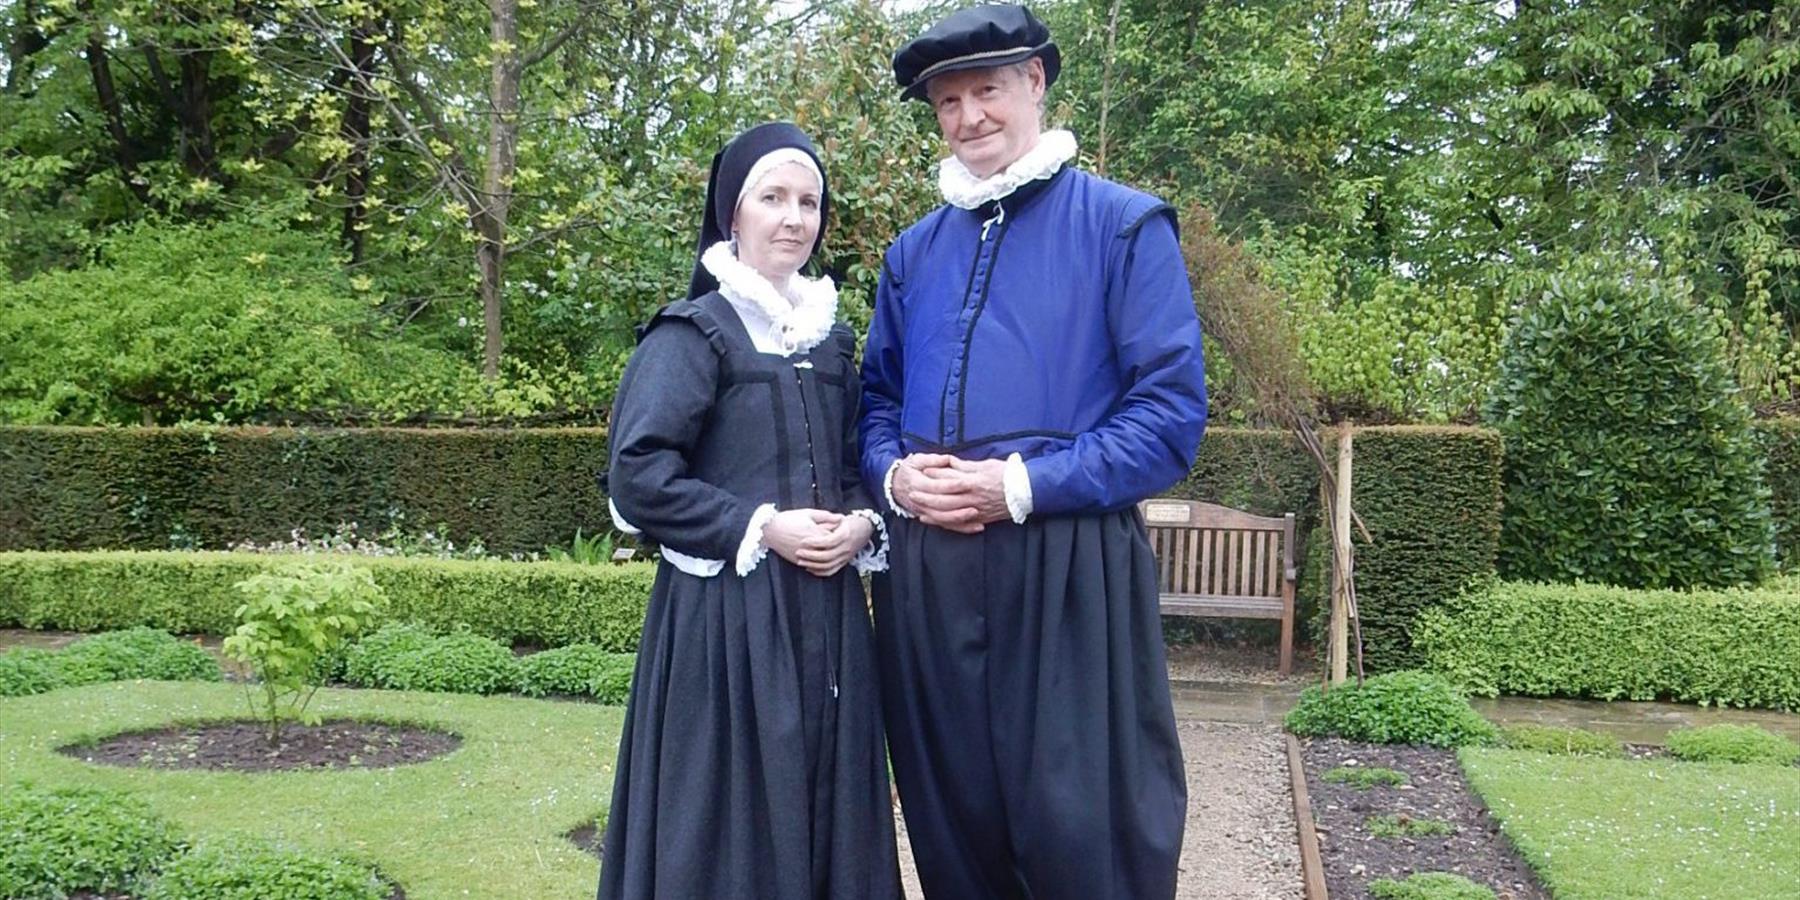 Mana and women in Elizabethan costune